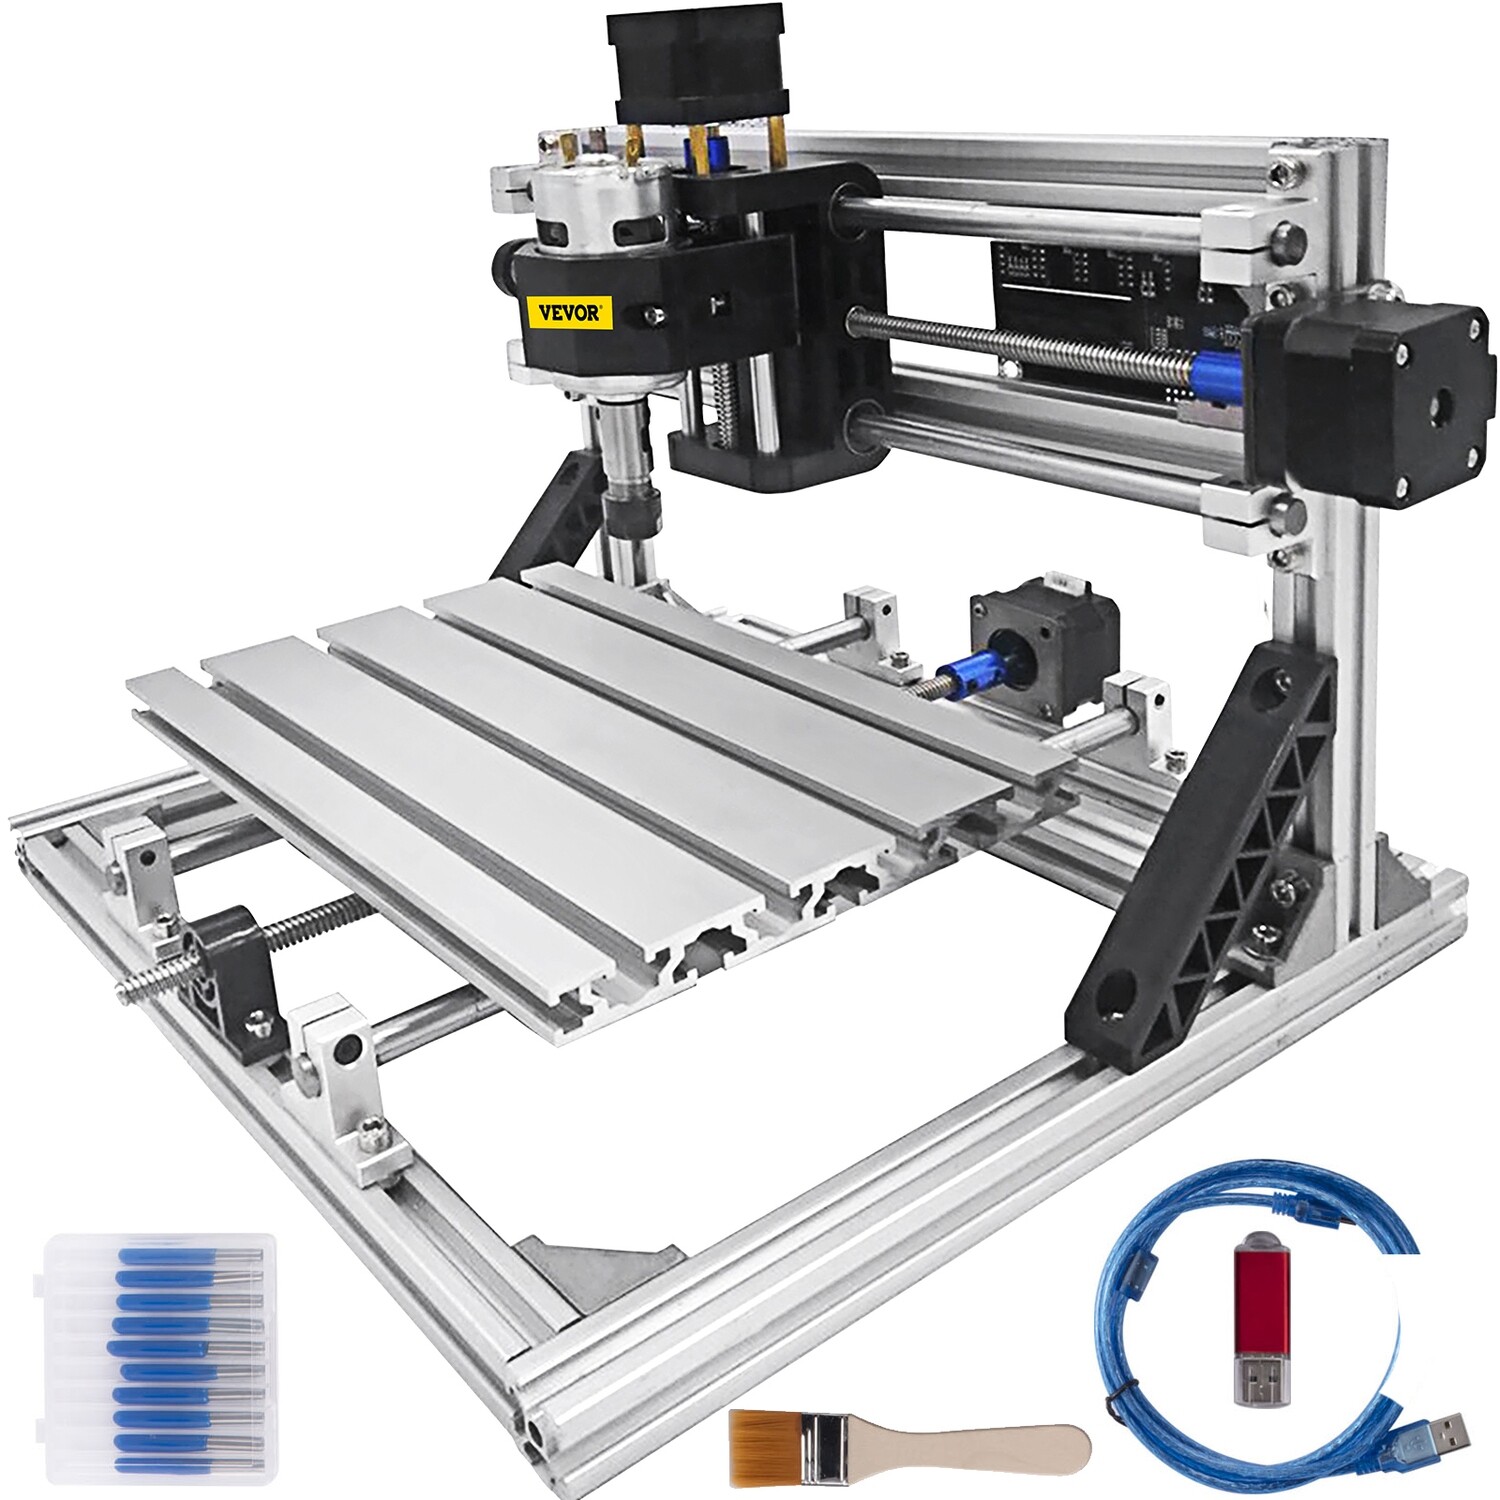 CNC 2418 GRBL Control Milling Machine For Wood PVB PCB 3-Axis Engraver Kit